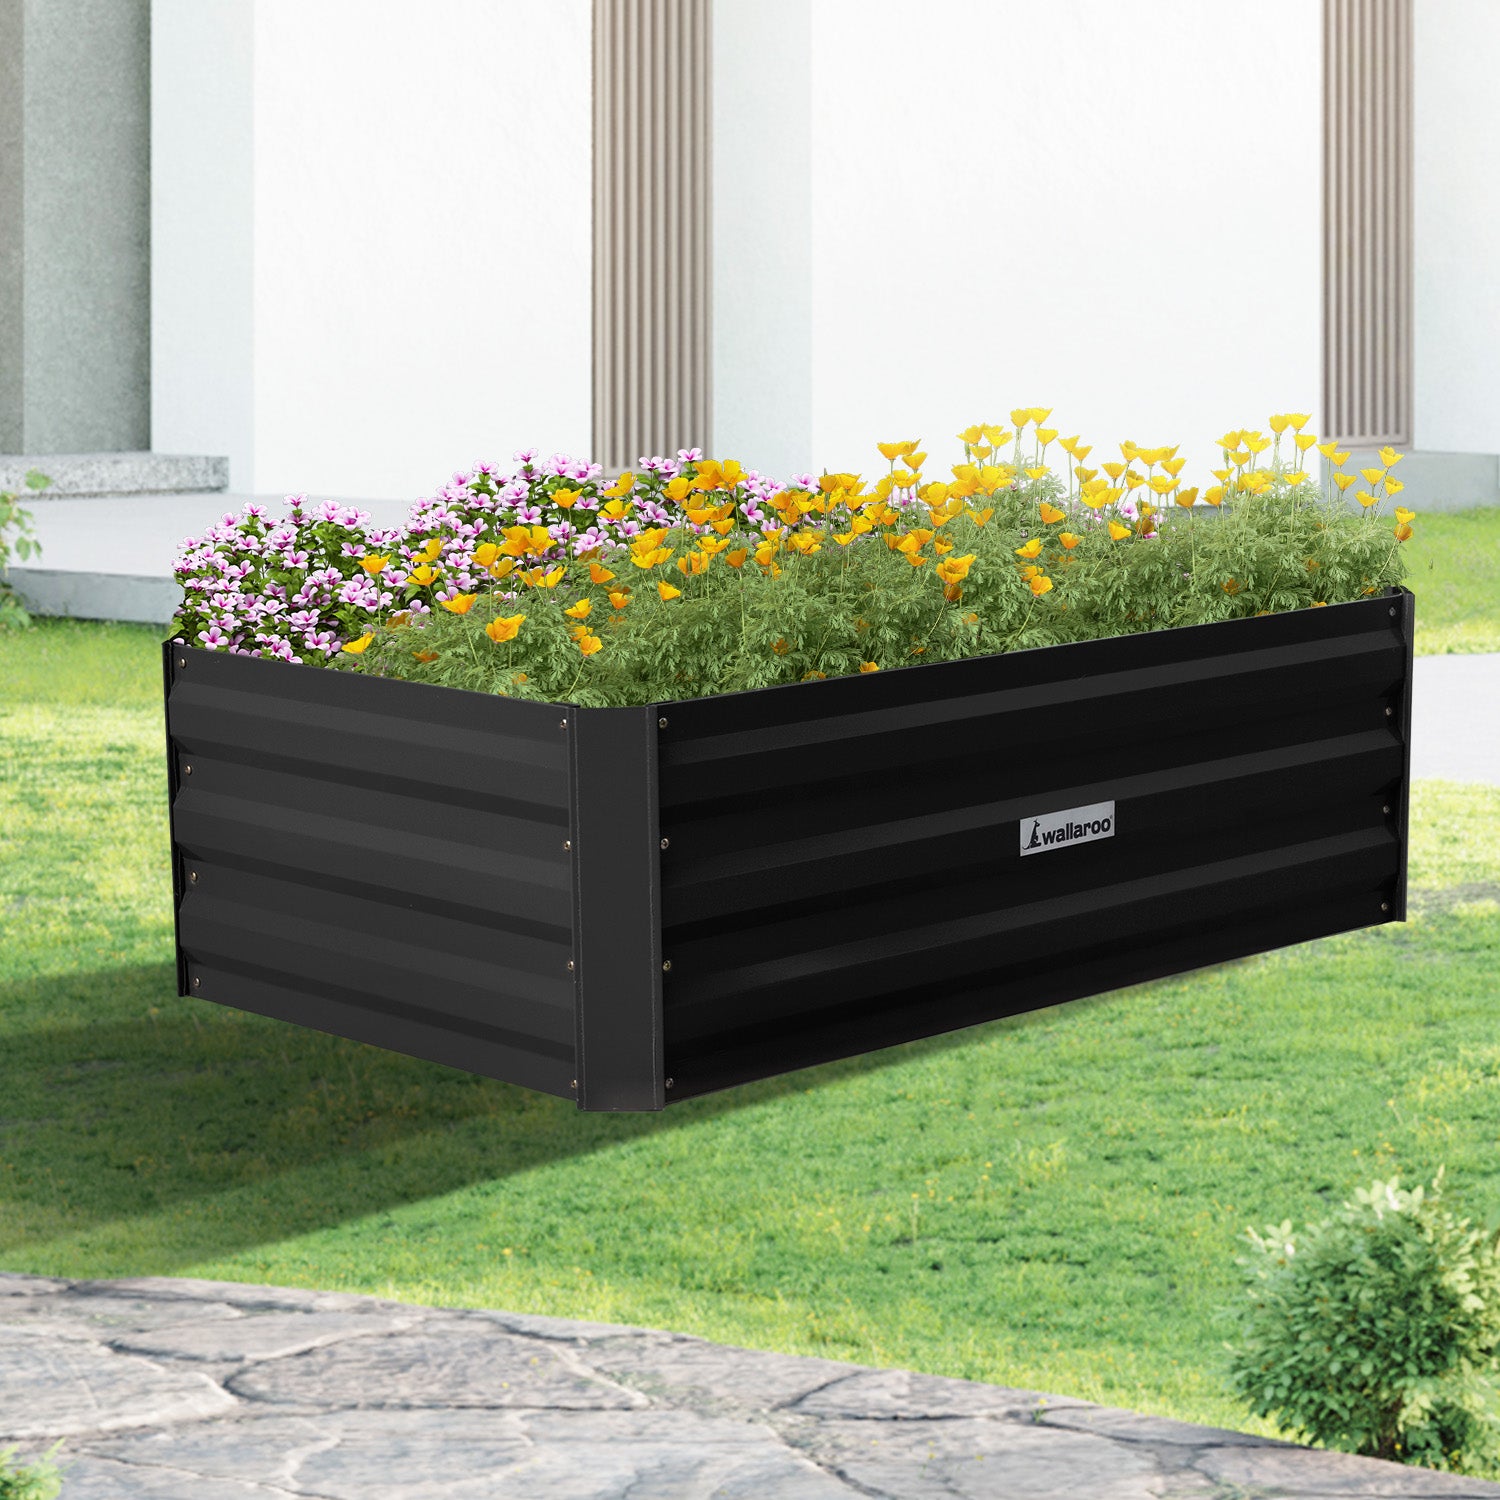 Wallaroo Garden Bed Galvanized Steel - Black 100 x 60 x 30cm